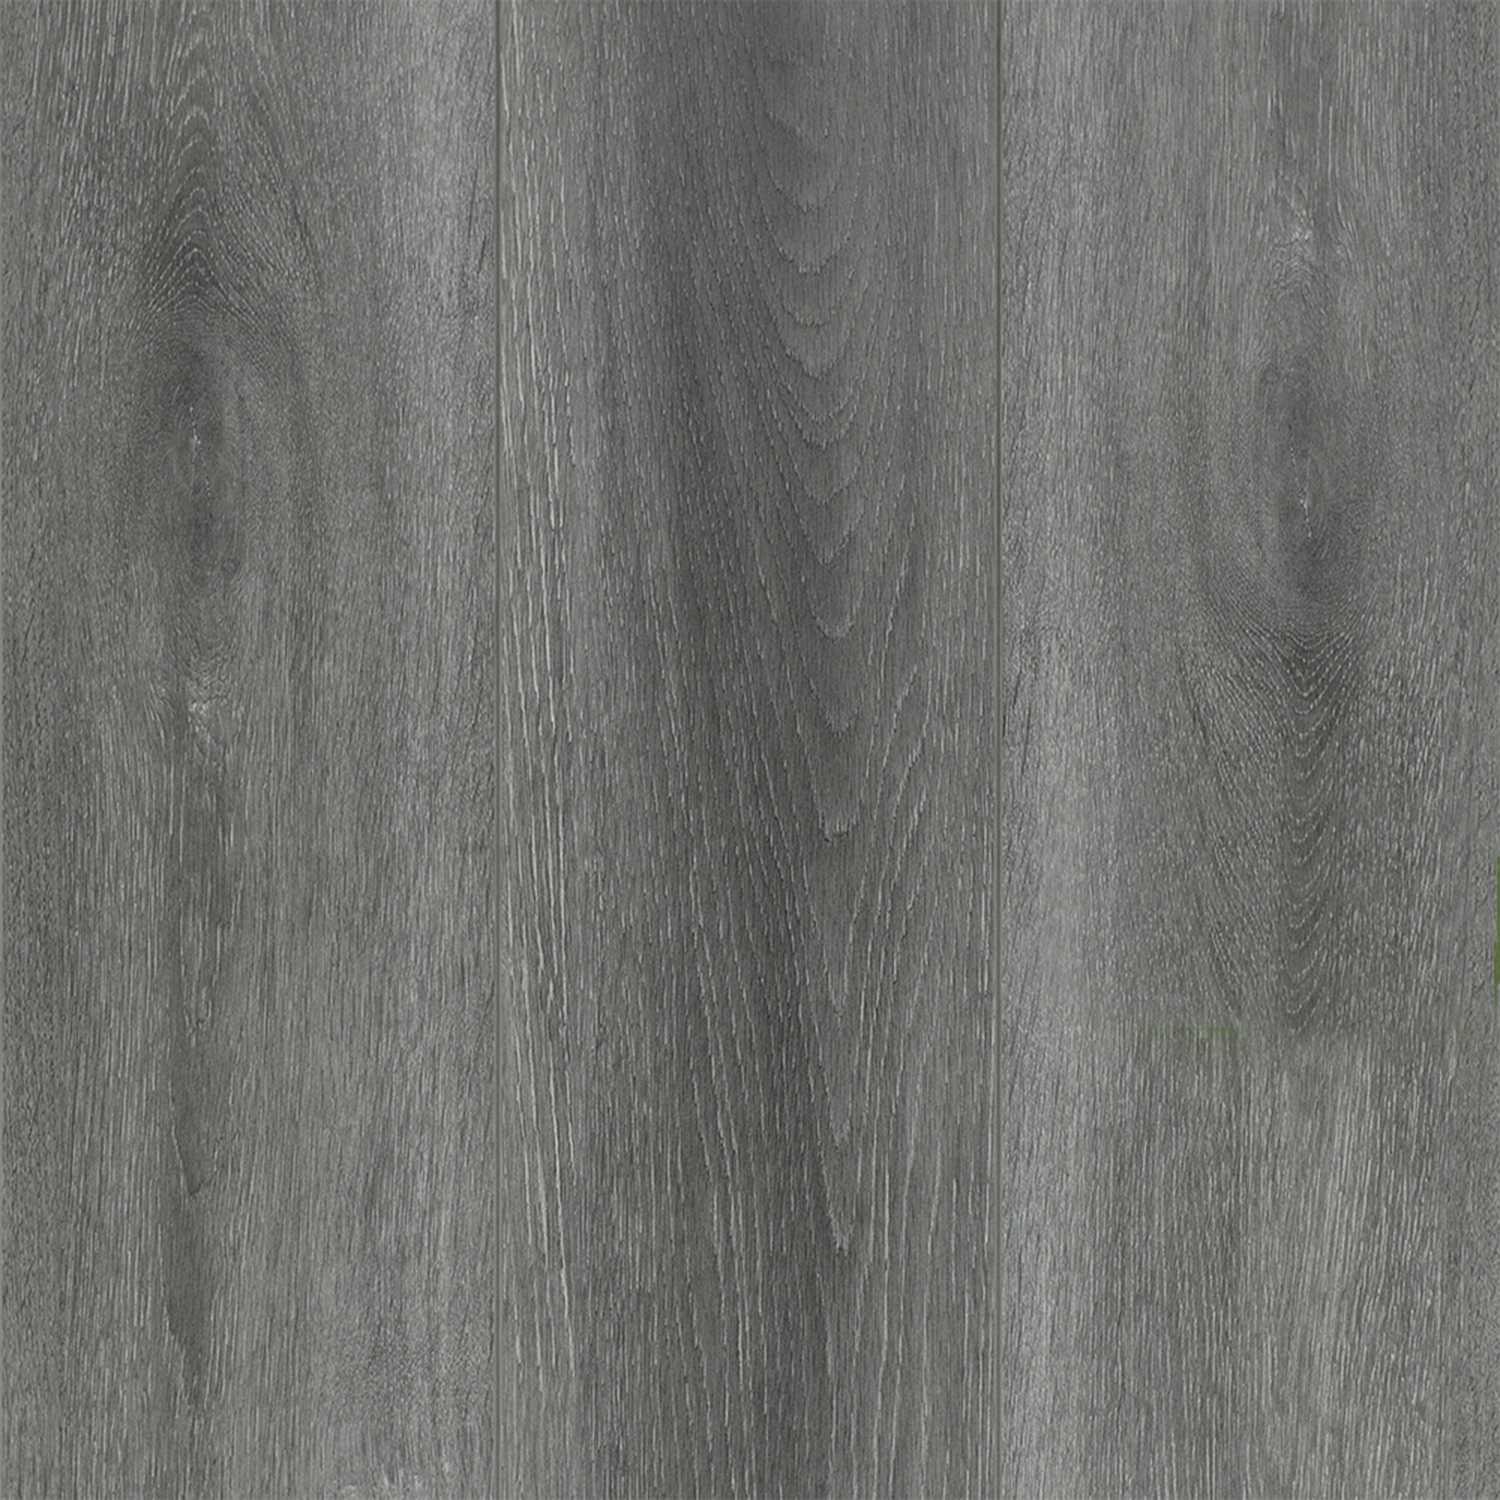 Lifestyle Flint Laminate Flooring Australian Select Timbers